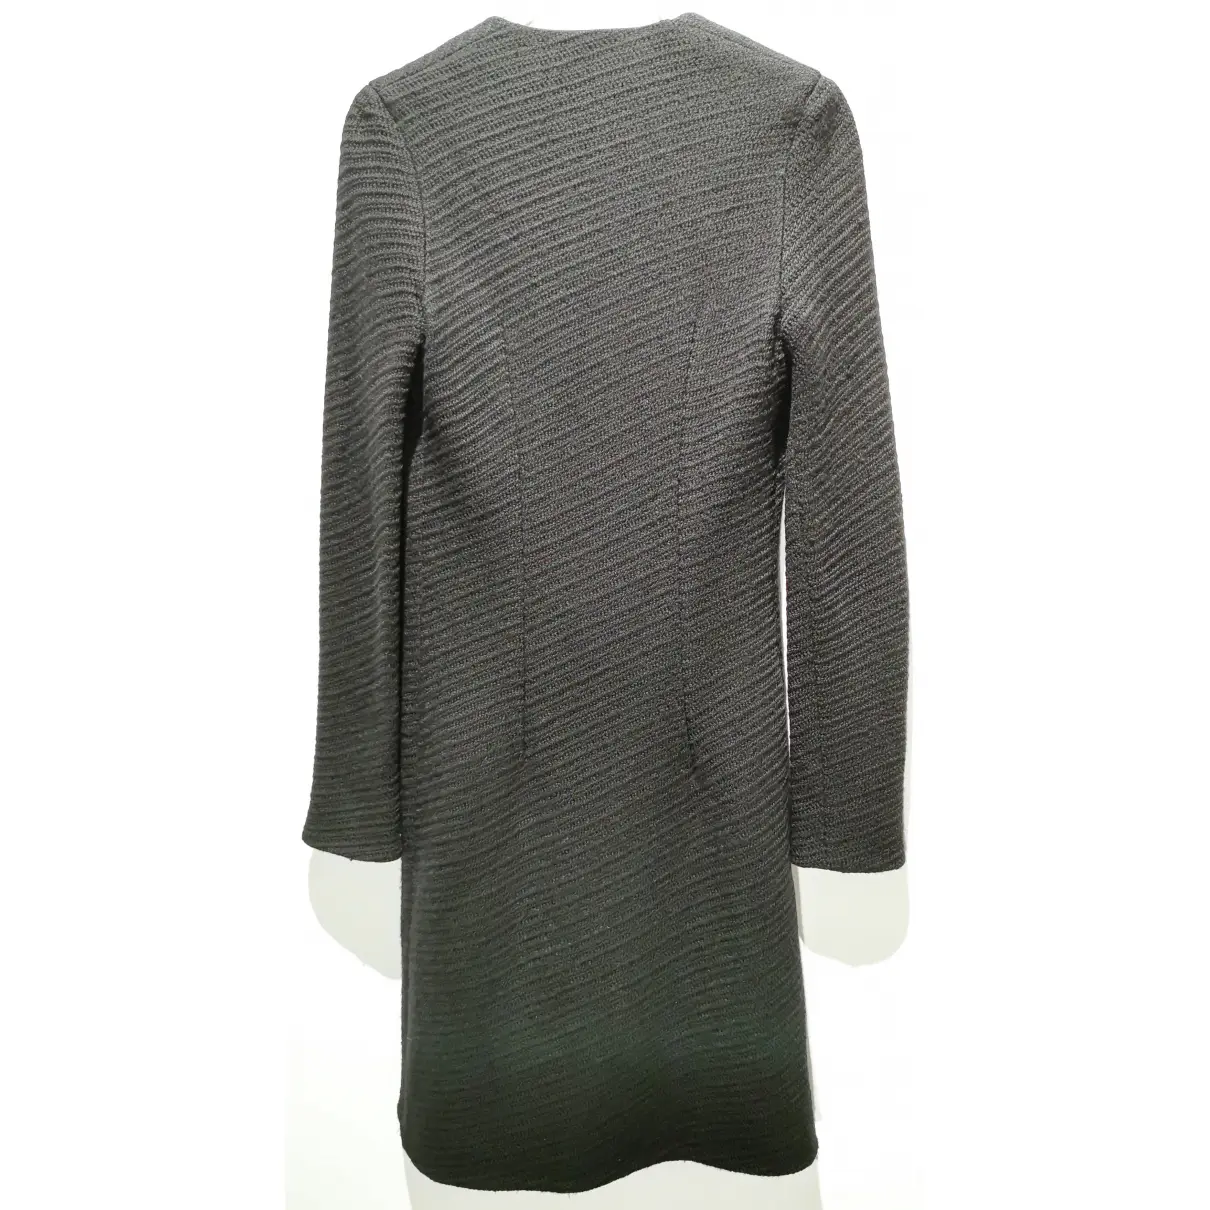 Buy Amanda Wakeley Wool coat online